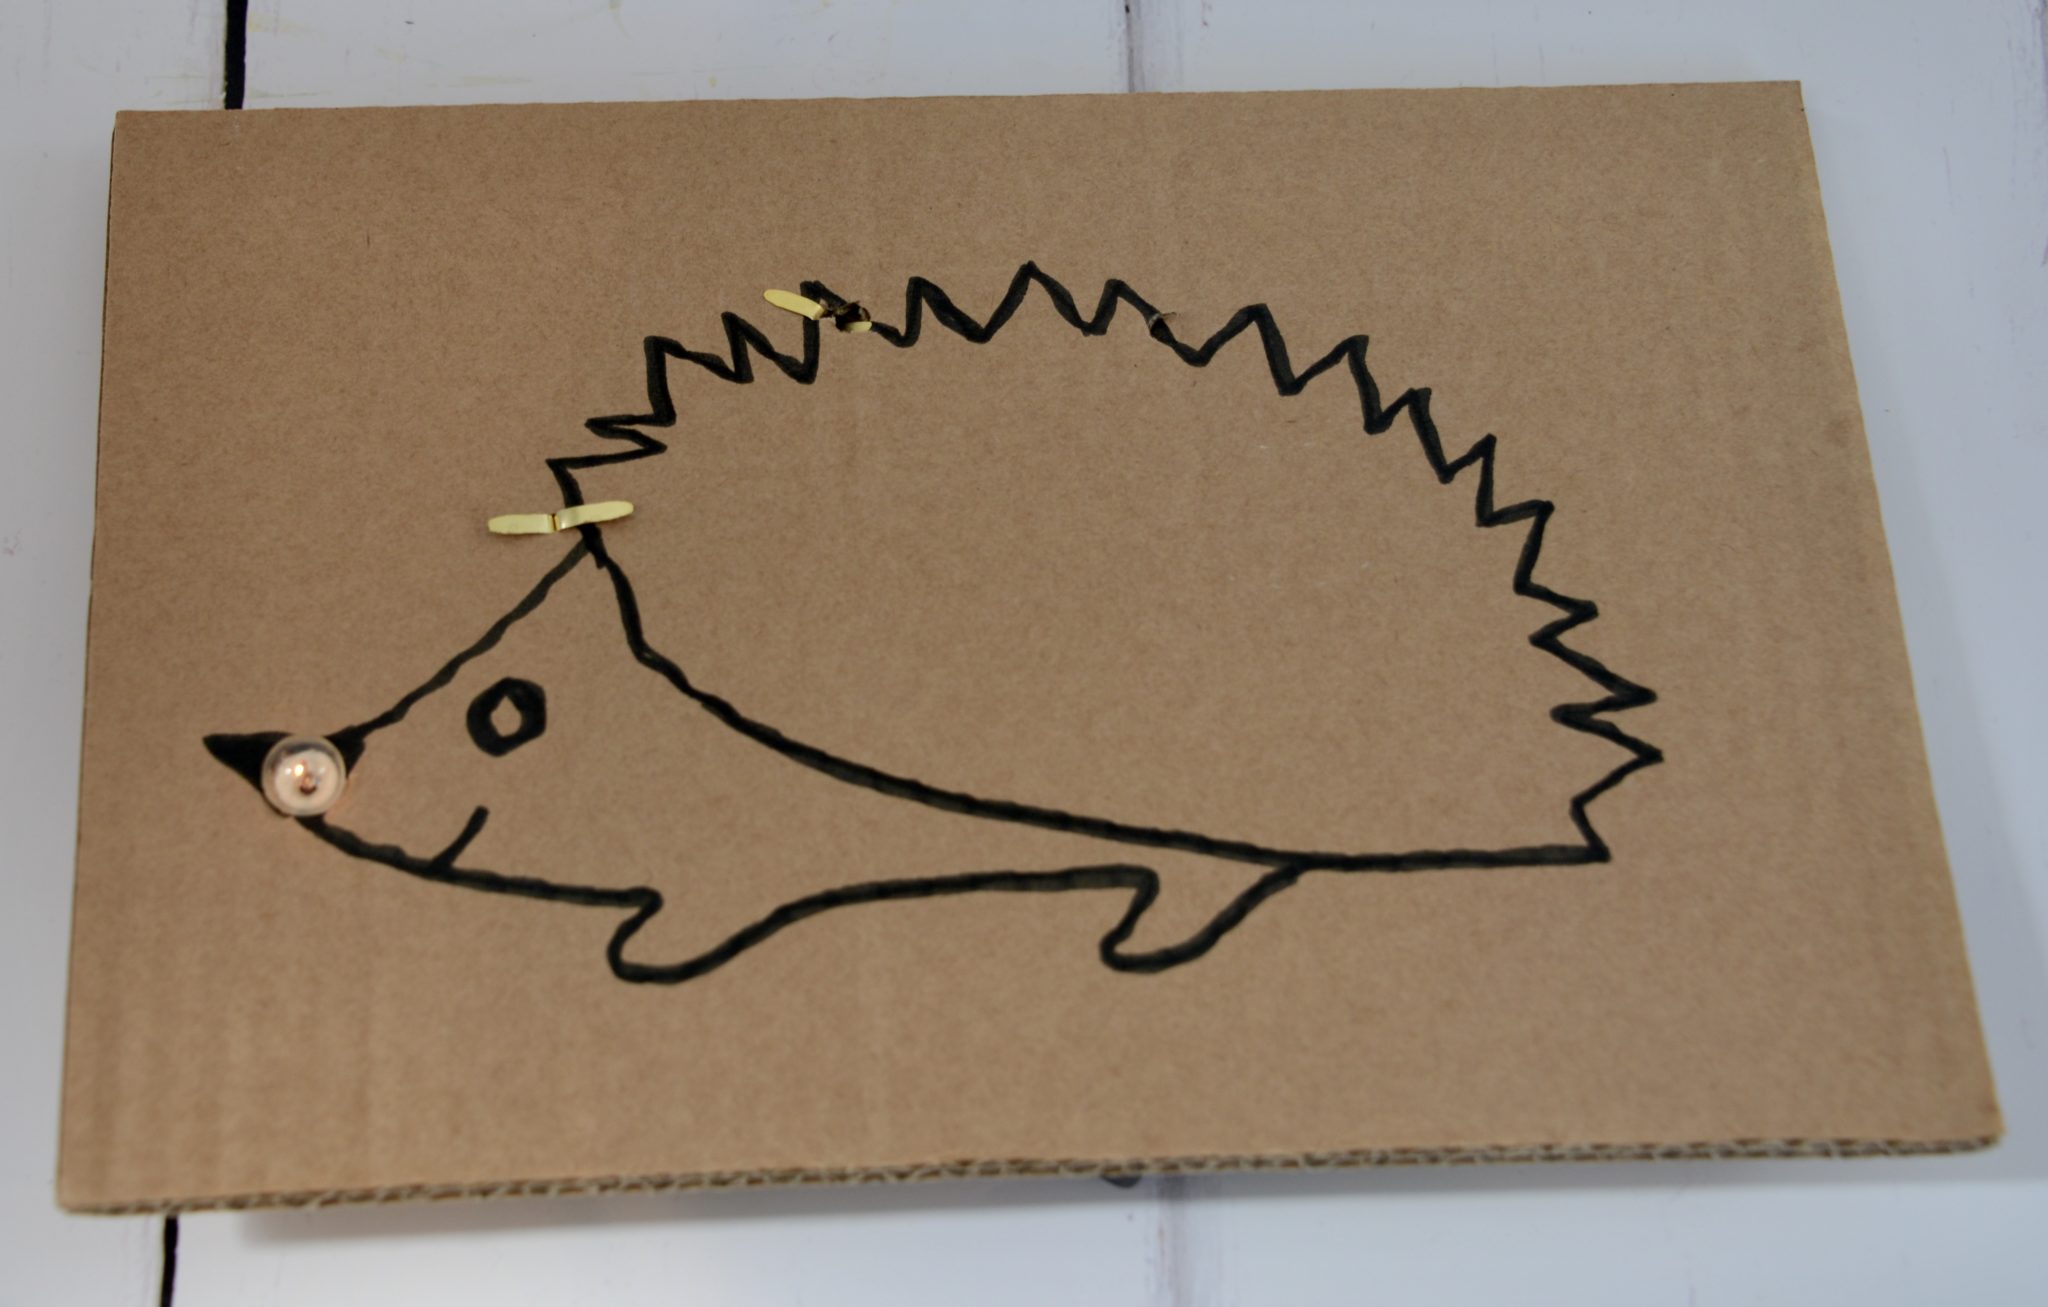 Image a of a hedgehog drawn on a sheet of cardboard for a fun cardboard STEM Challenge